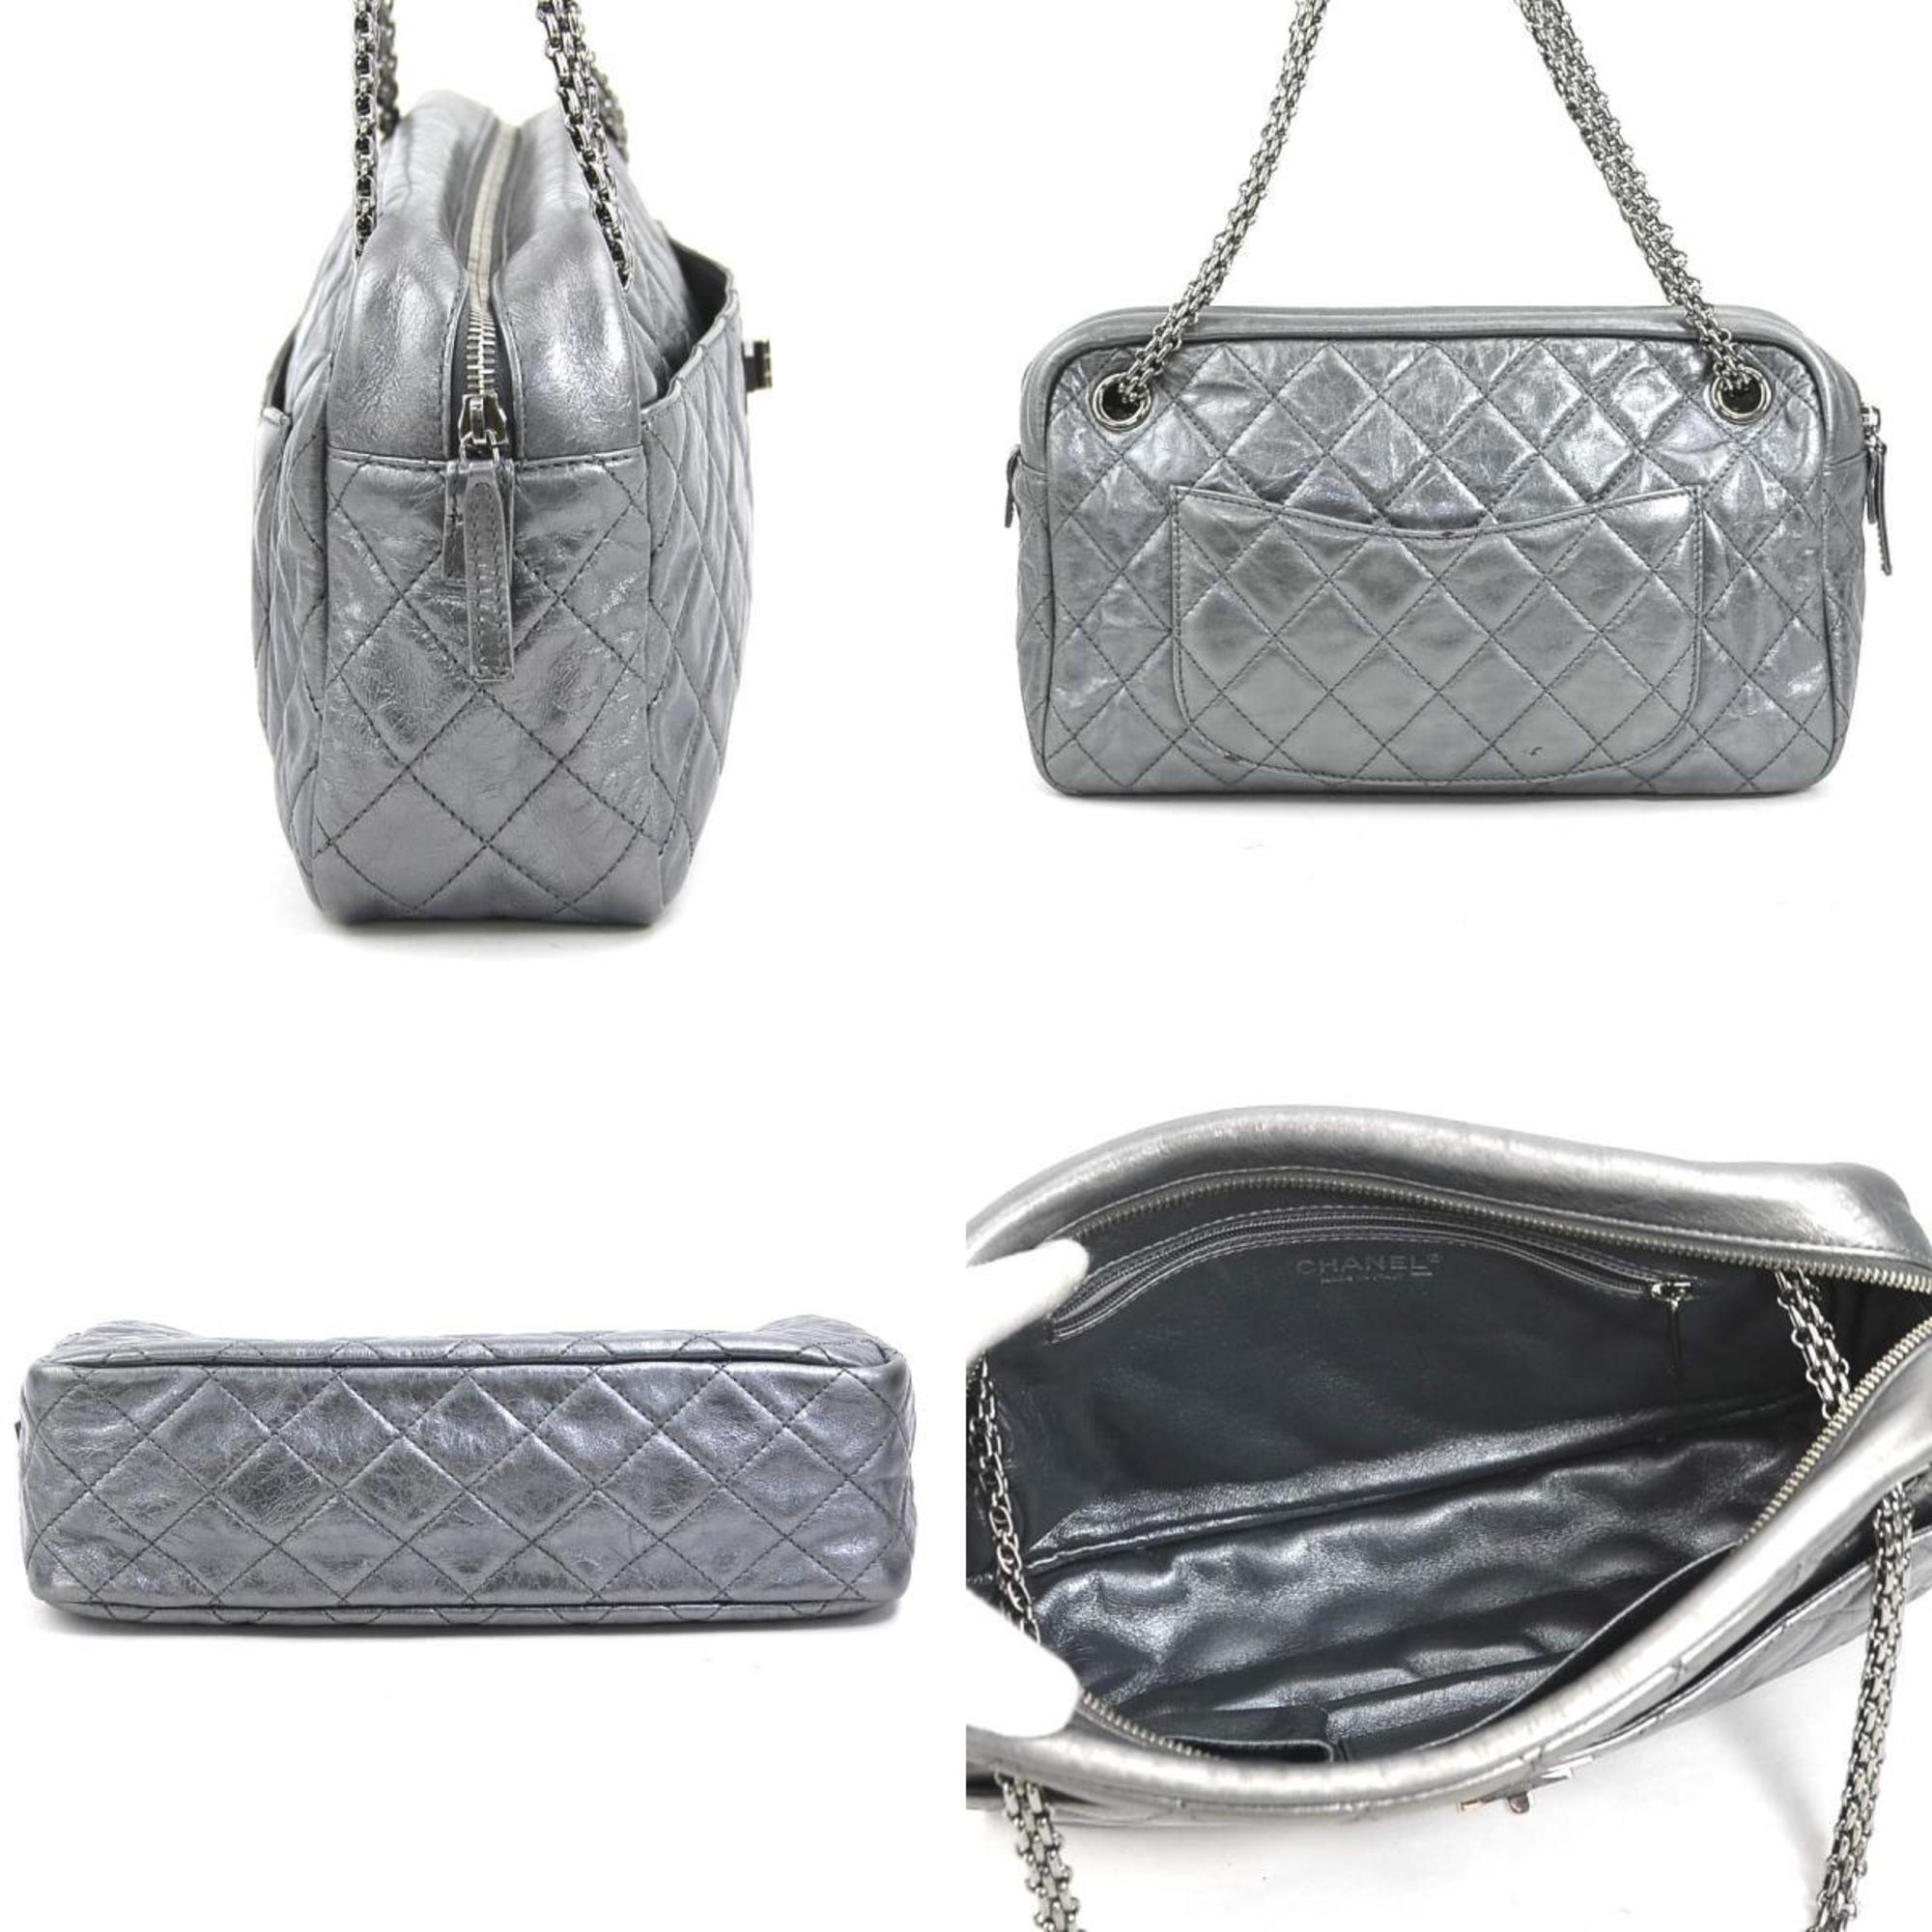 CHANEL Shoulder Bag 2.55 Leather Metallic Gray Silver Women's e58721f